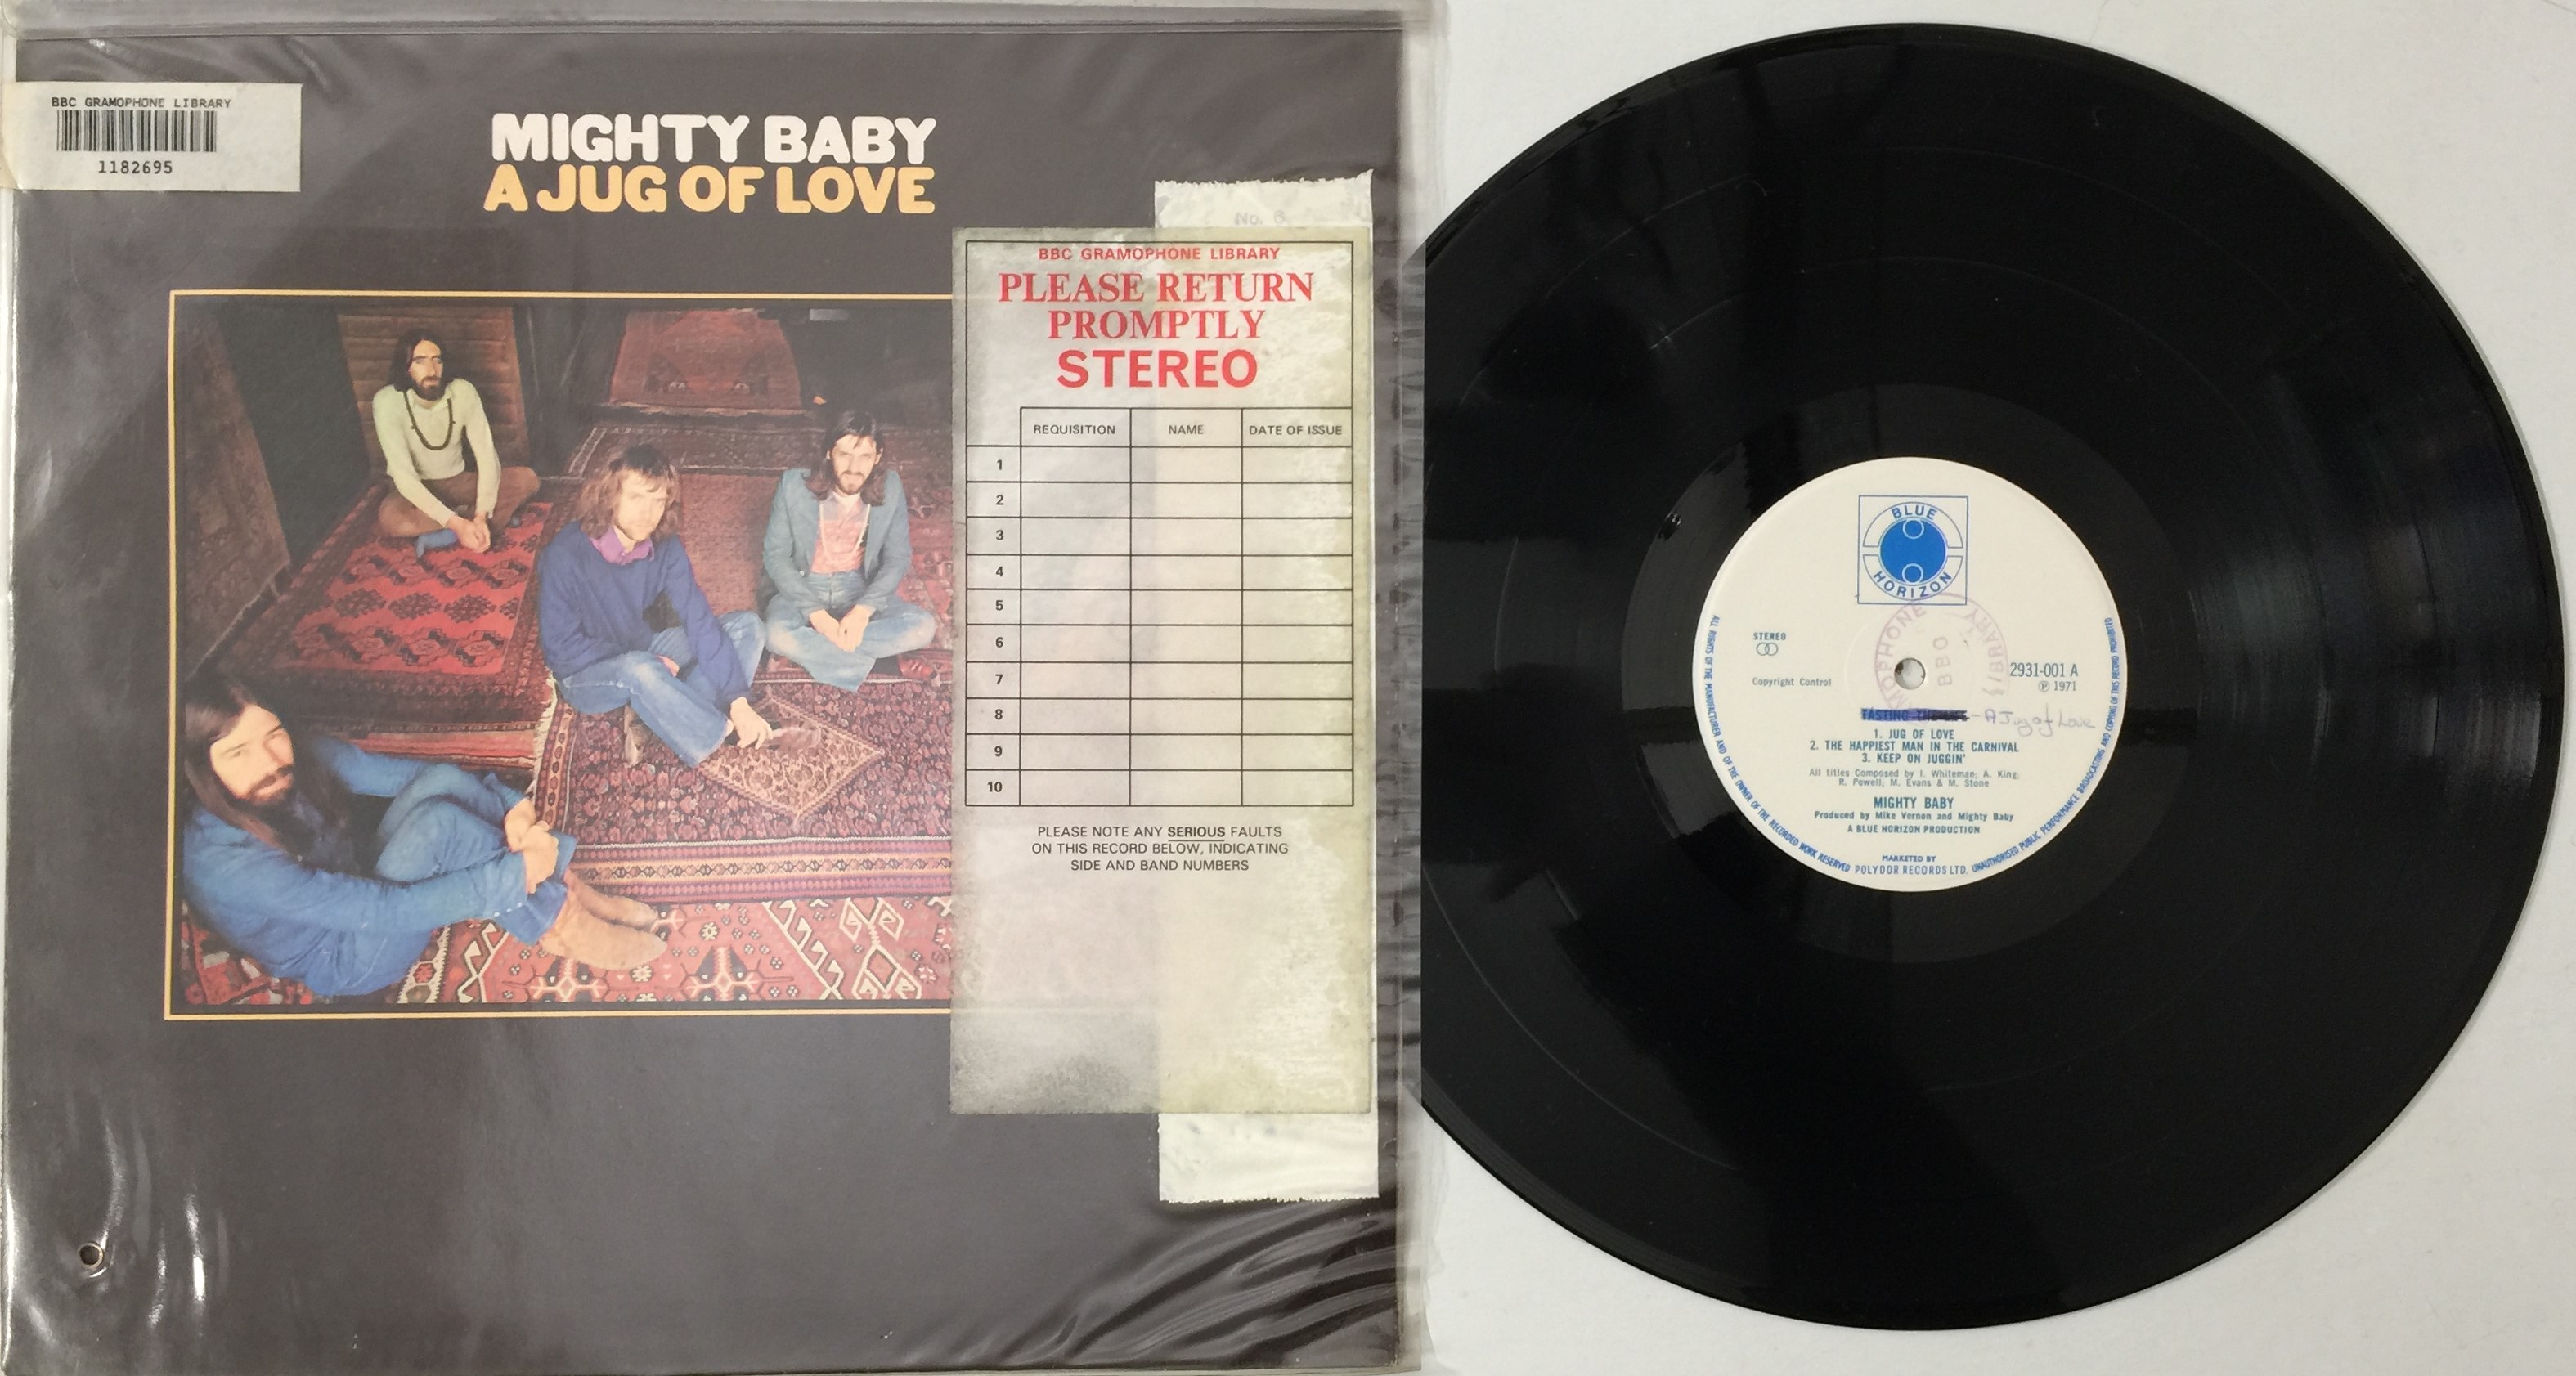 Lot 204 - MIGHTY BABY - A JUG OF LOVE LP (UK ORIGINAL -